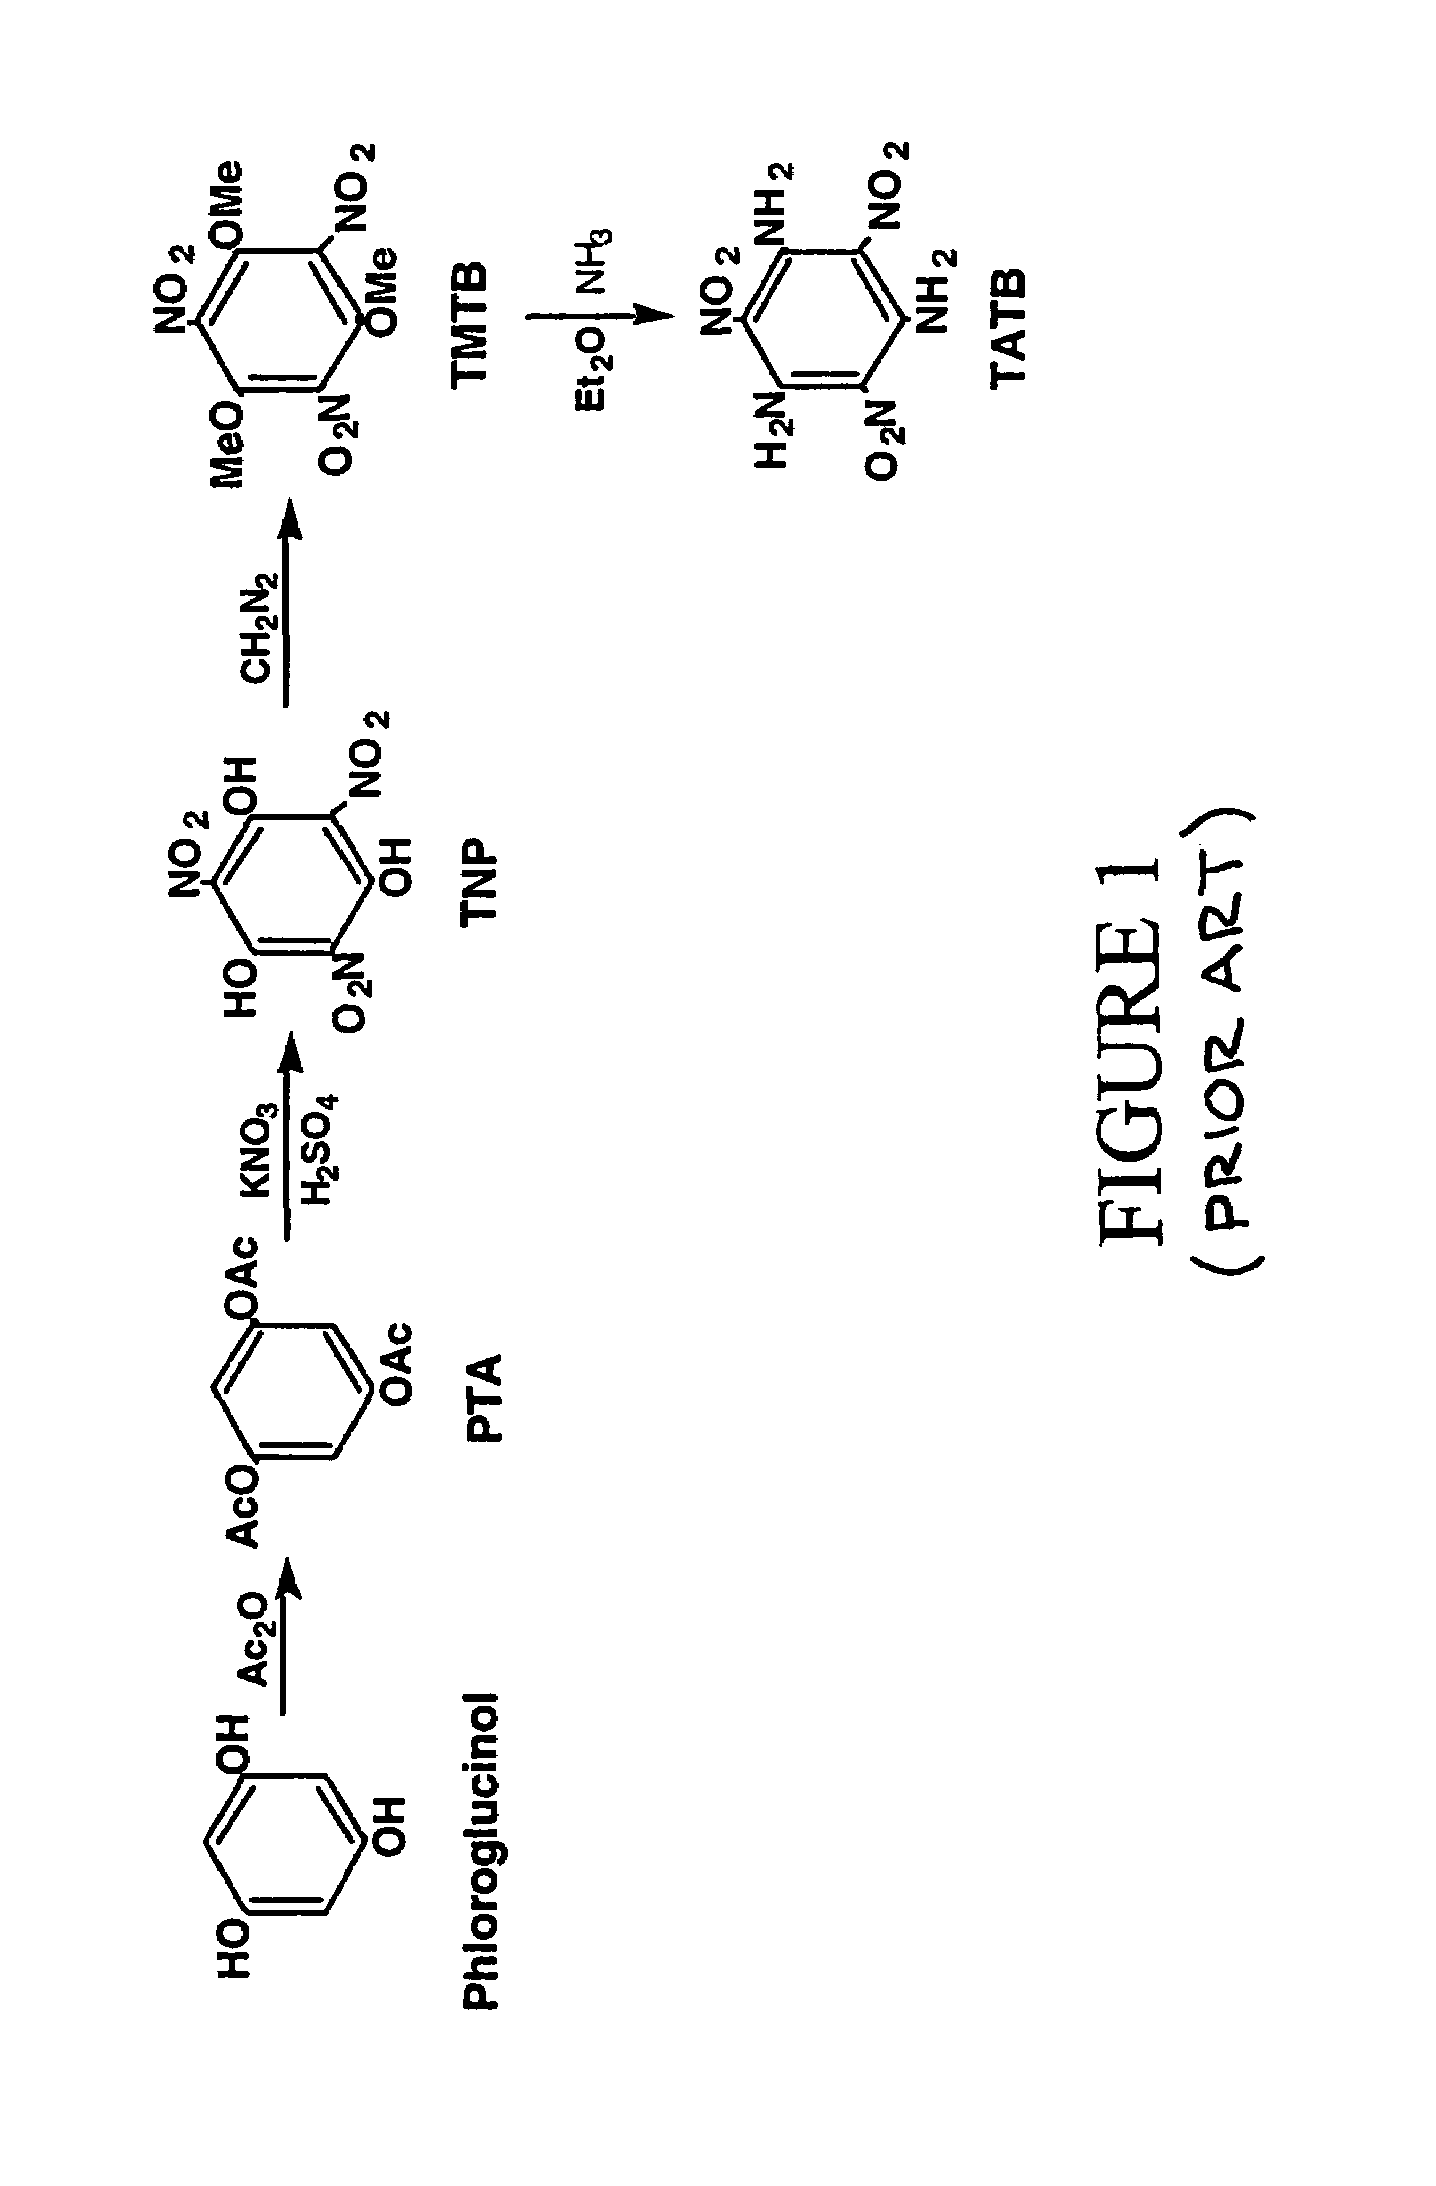 Synthesis of trinitrophloroglucinol and triaminotrinitrobenzene (TATB)